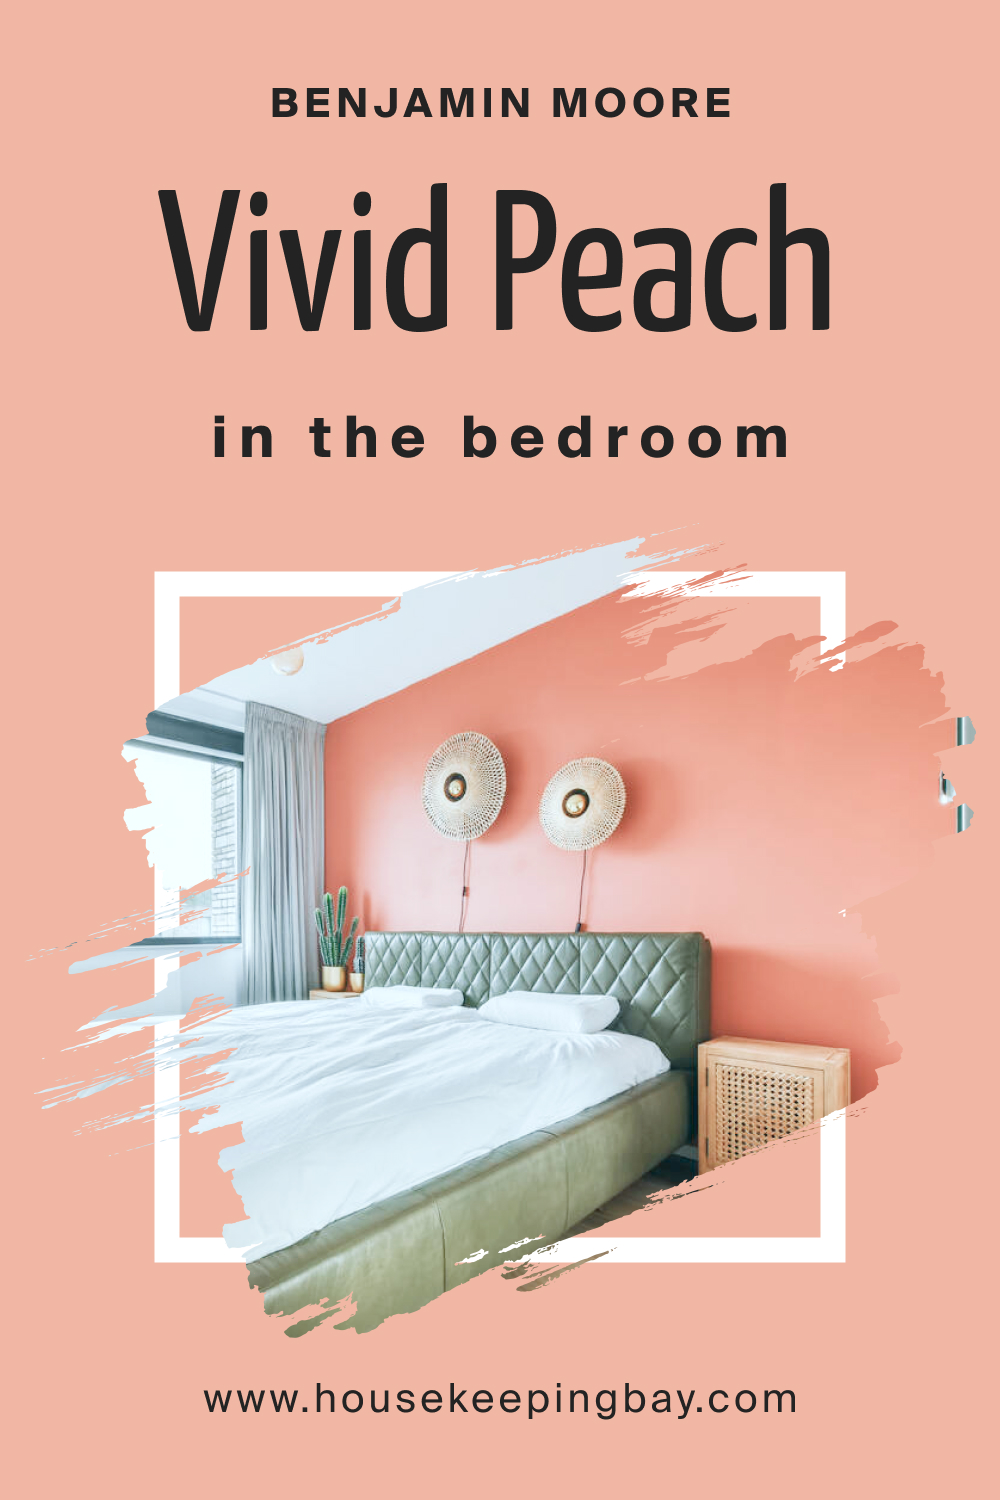 Benjamin Moore. Vivid Peach 025 for the Bedroom